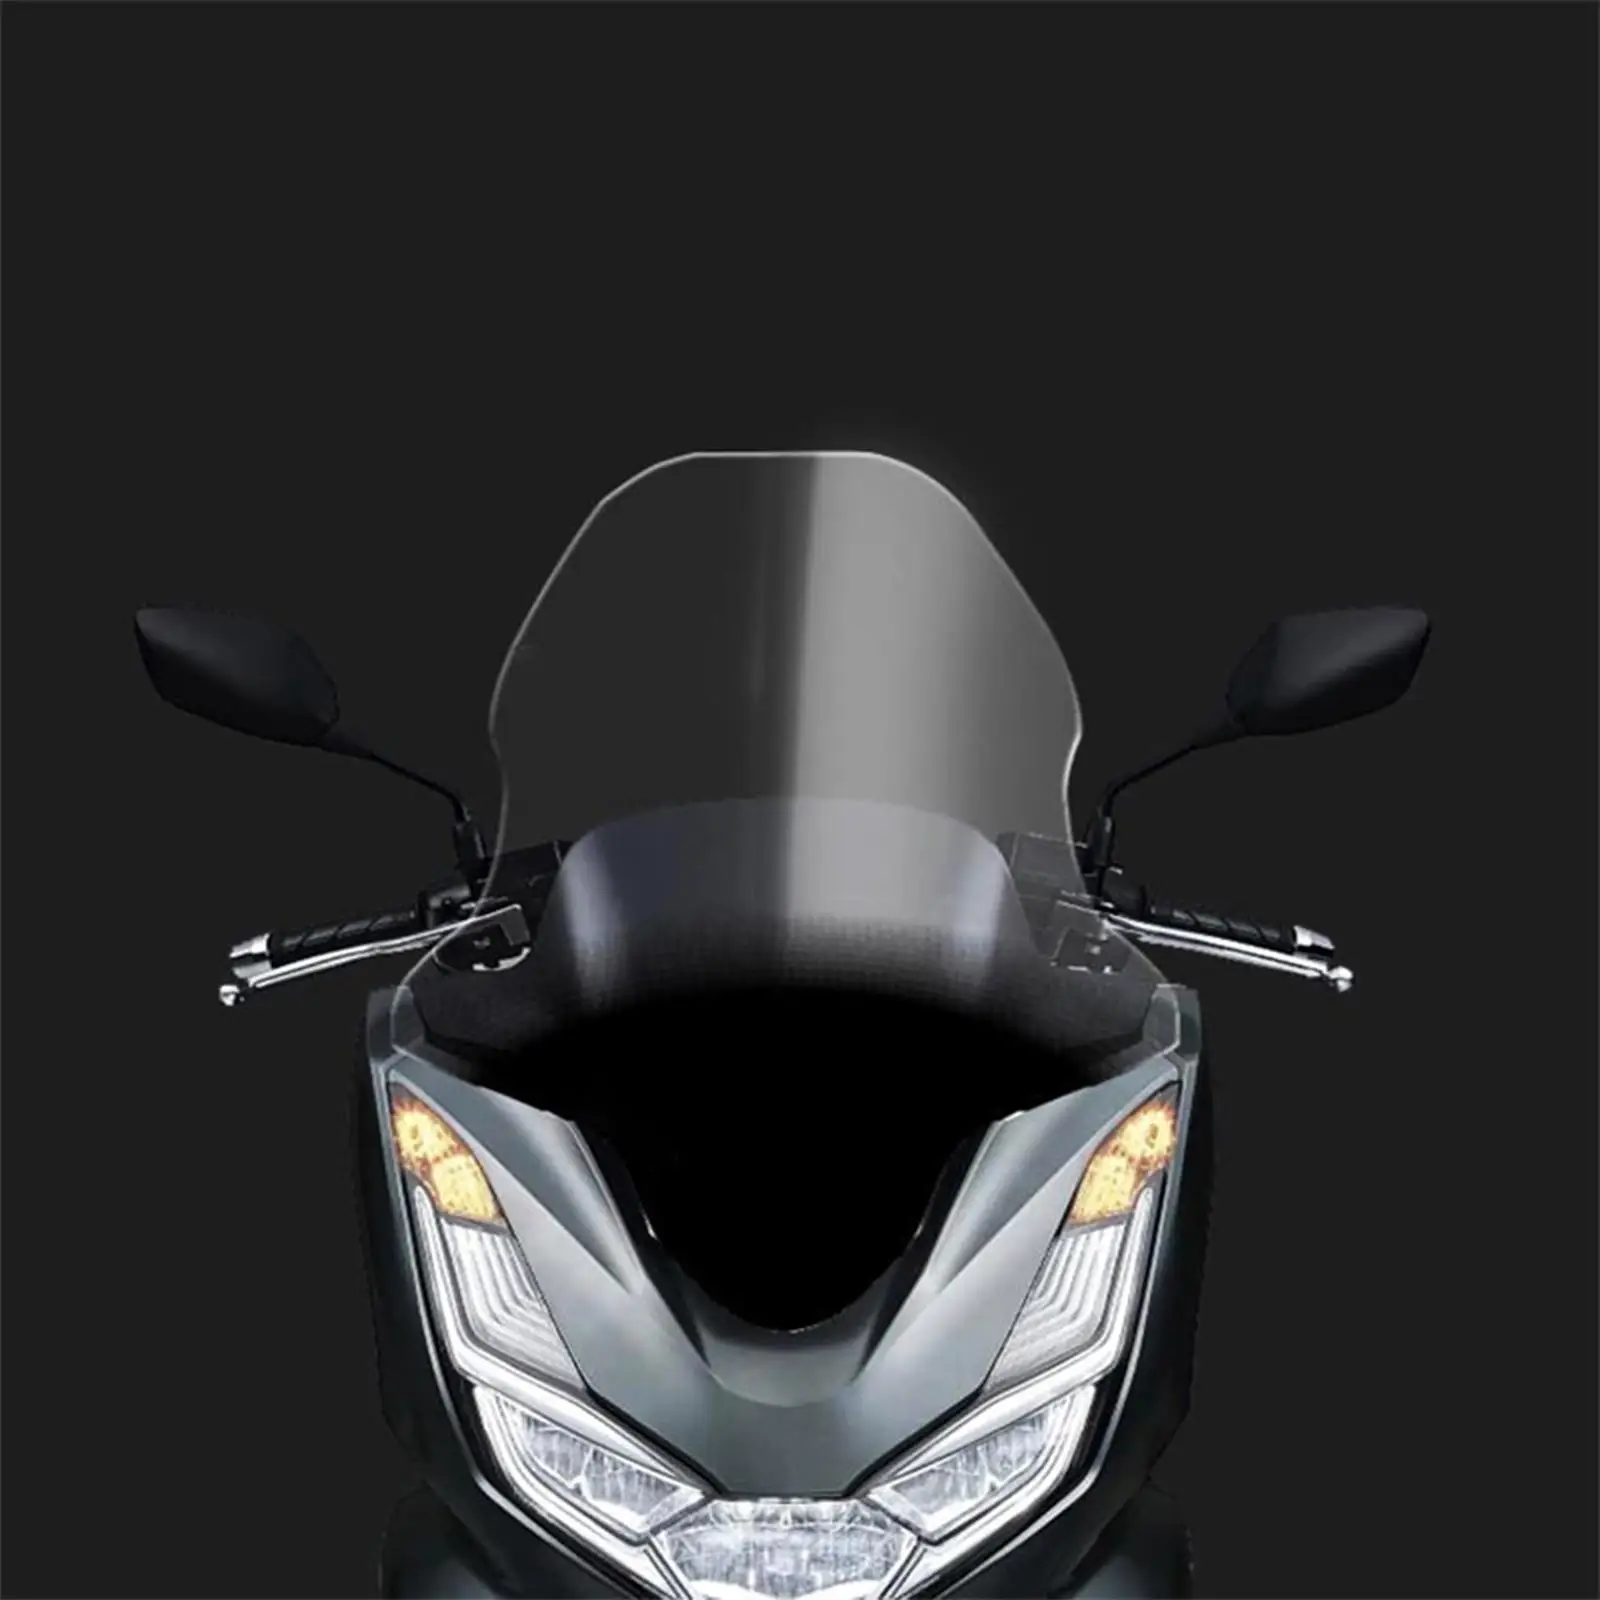 Motorbike Windshield   Wind Deflector Fit for Pcx160 2022